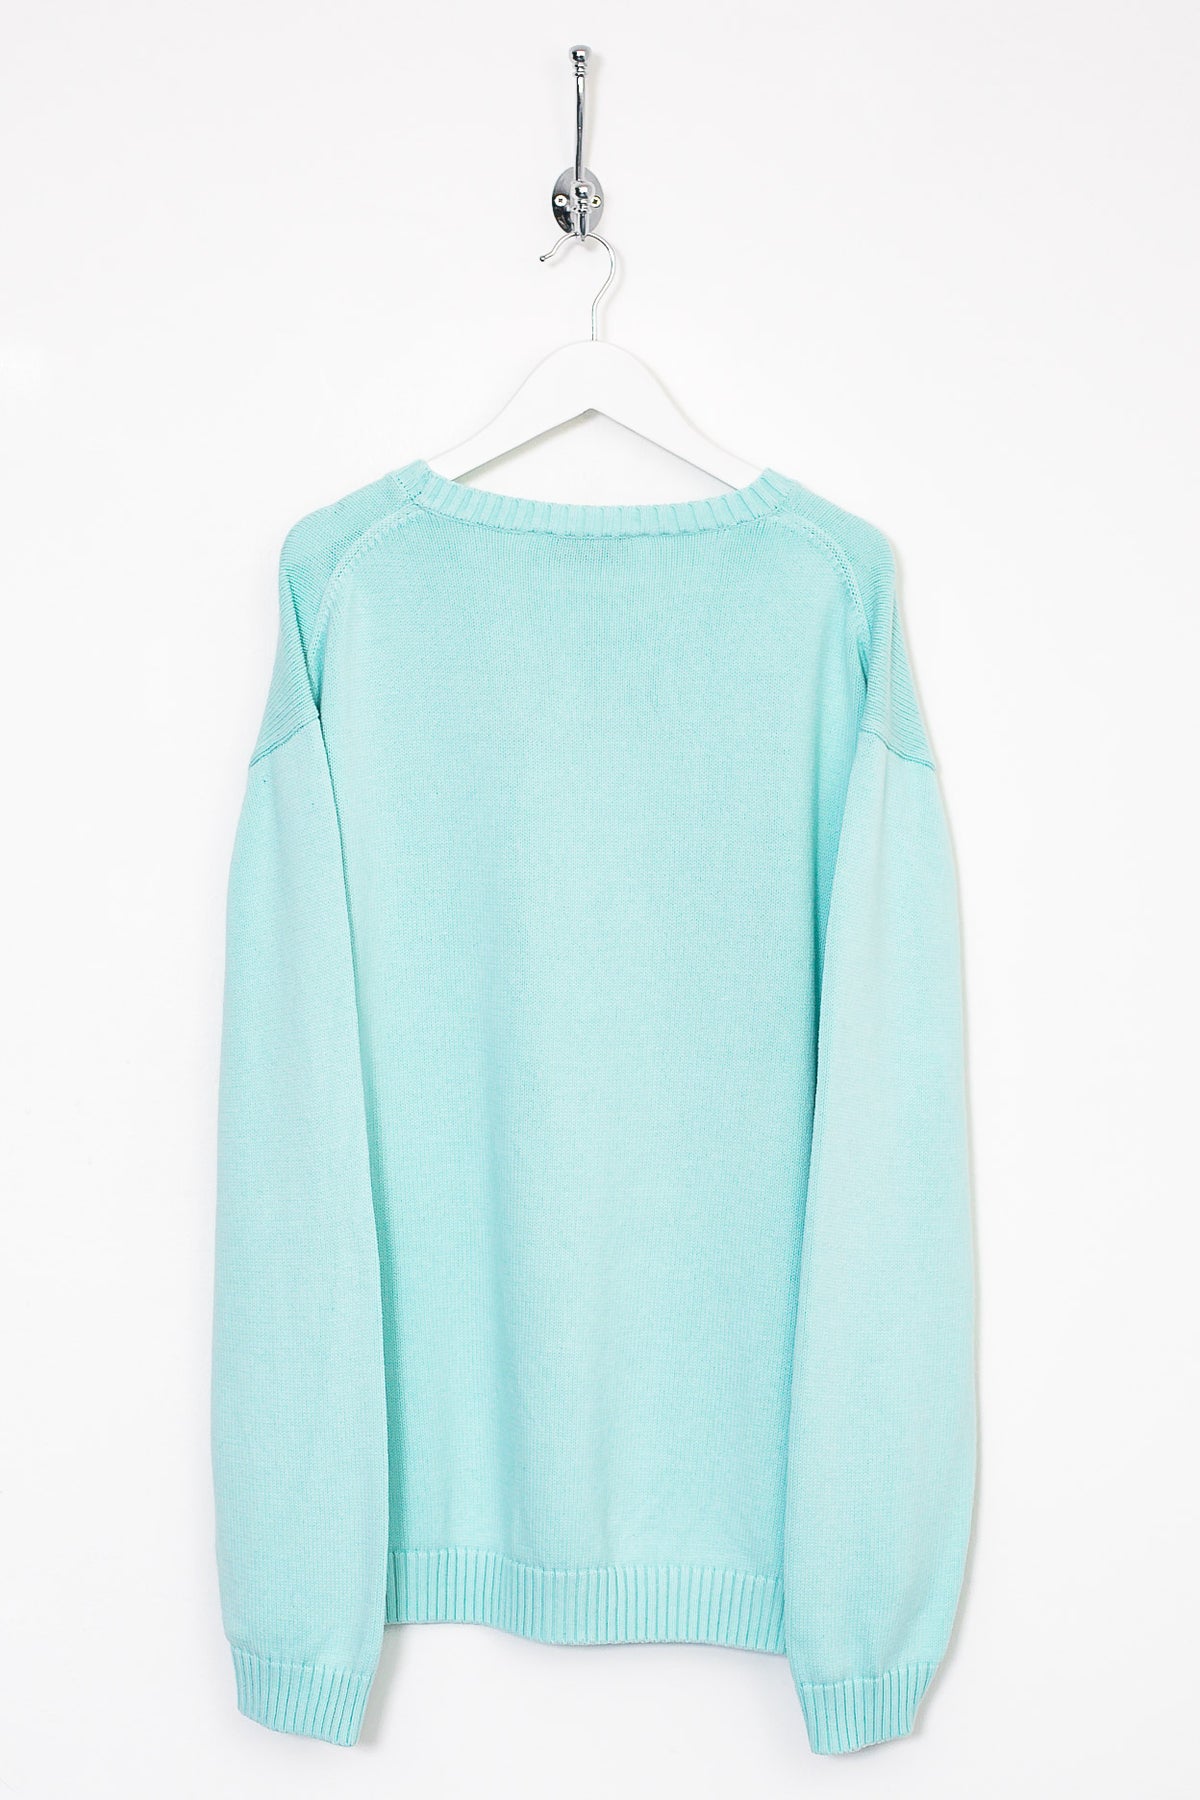 00s YSL Knit Sweatshirt (XL)